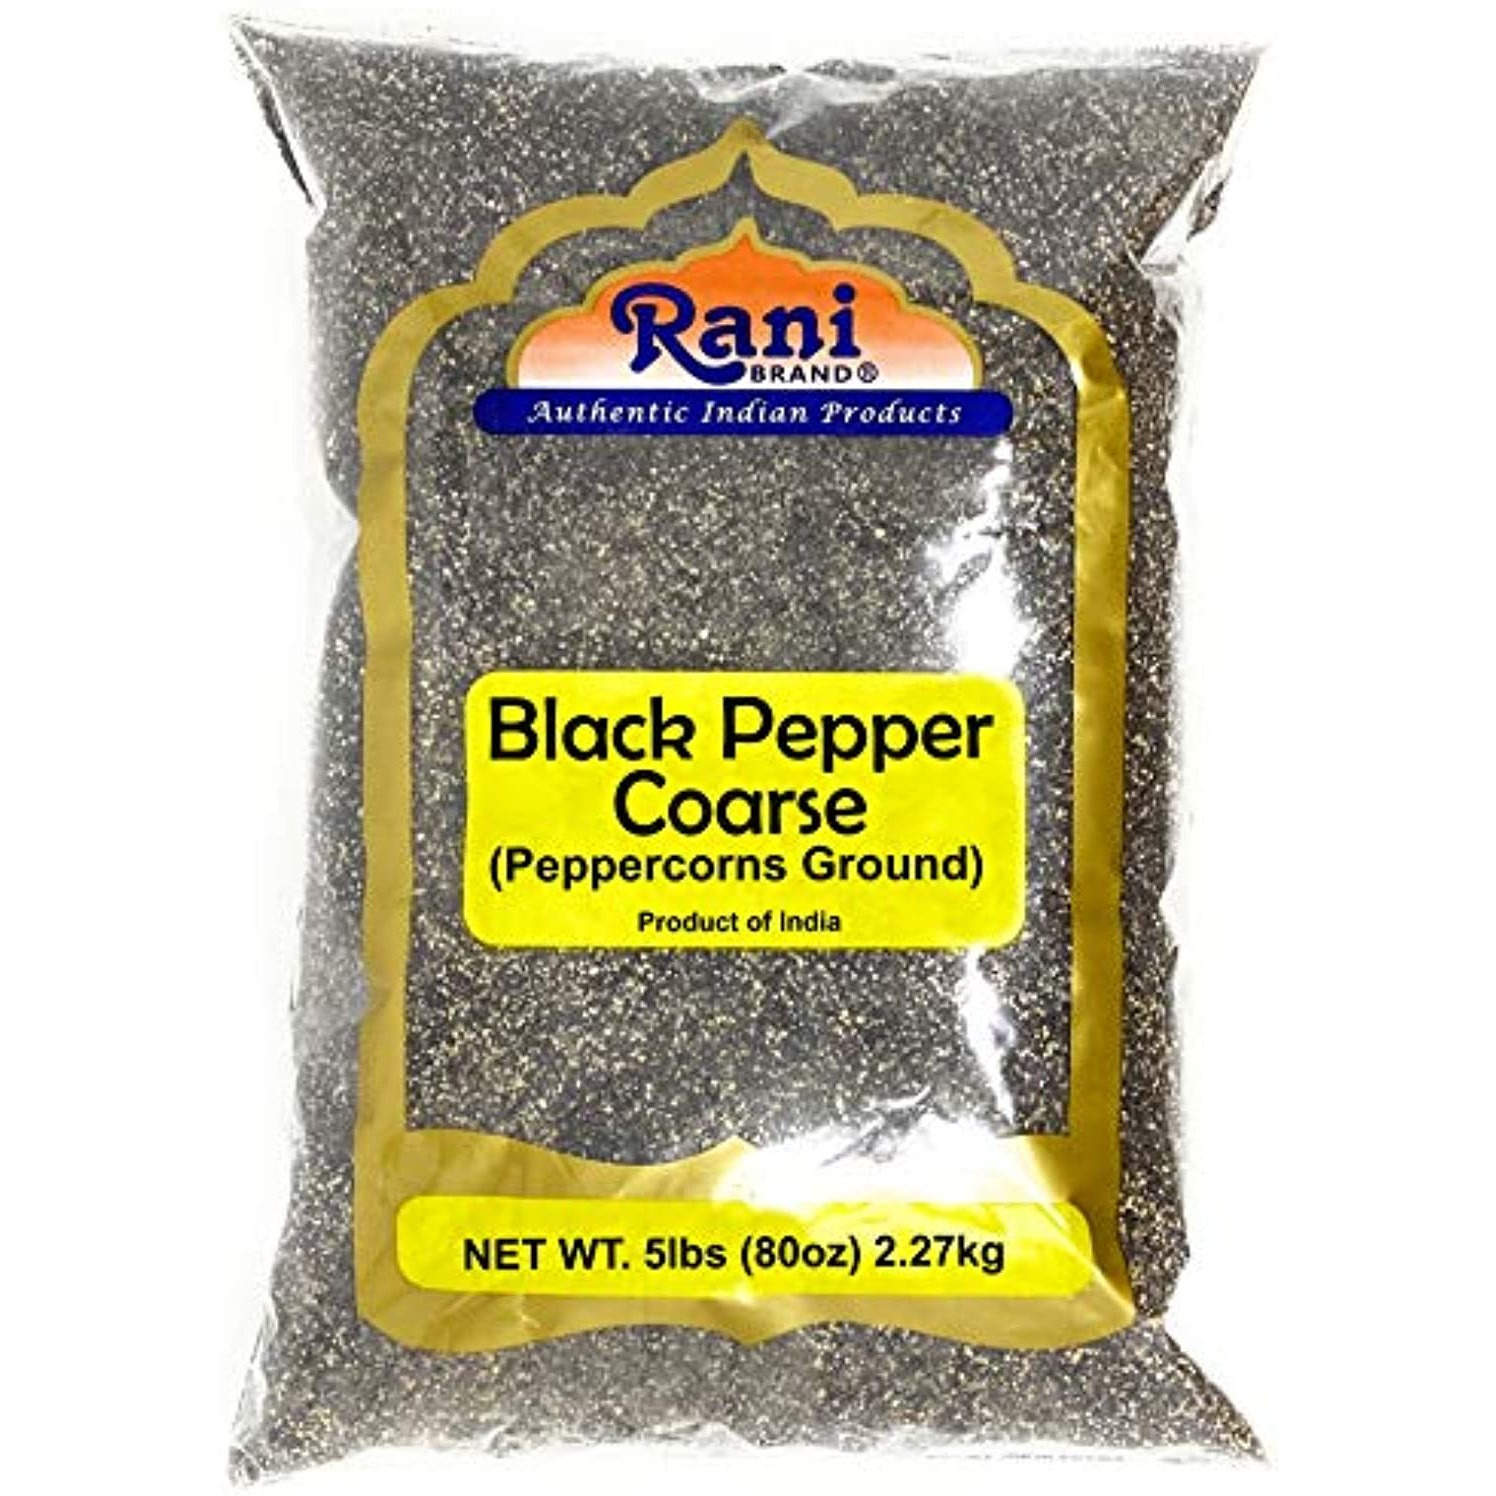 Rani Black Pepper Coarse Ground 28 Mesh (Table Grind), Premium Indian 80oz (5lbs) 5 Pound ~ Gluten Friendly, Non-GMO, All Natural